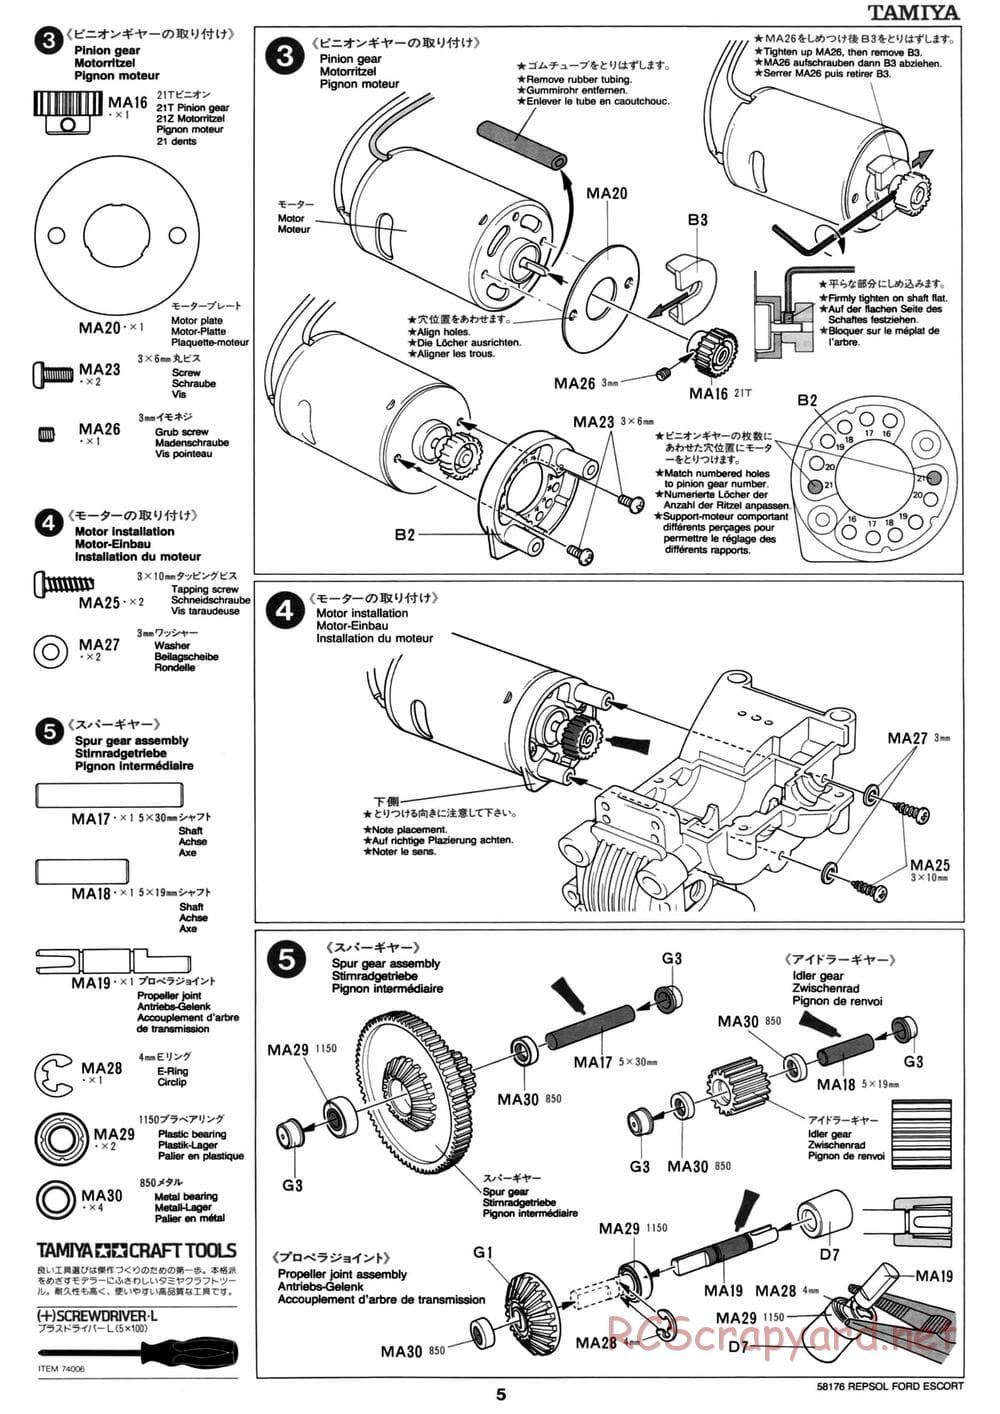 Tamiya - Repsol Ford Escort RS Cosworth - TA-02 Chassis - Manual - Page 5